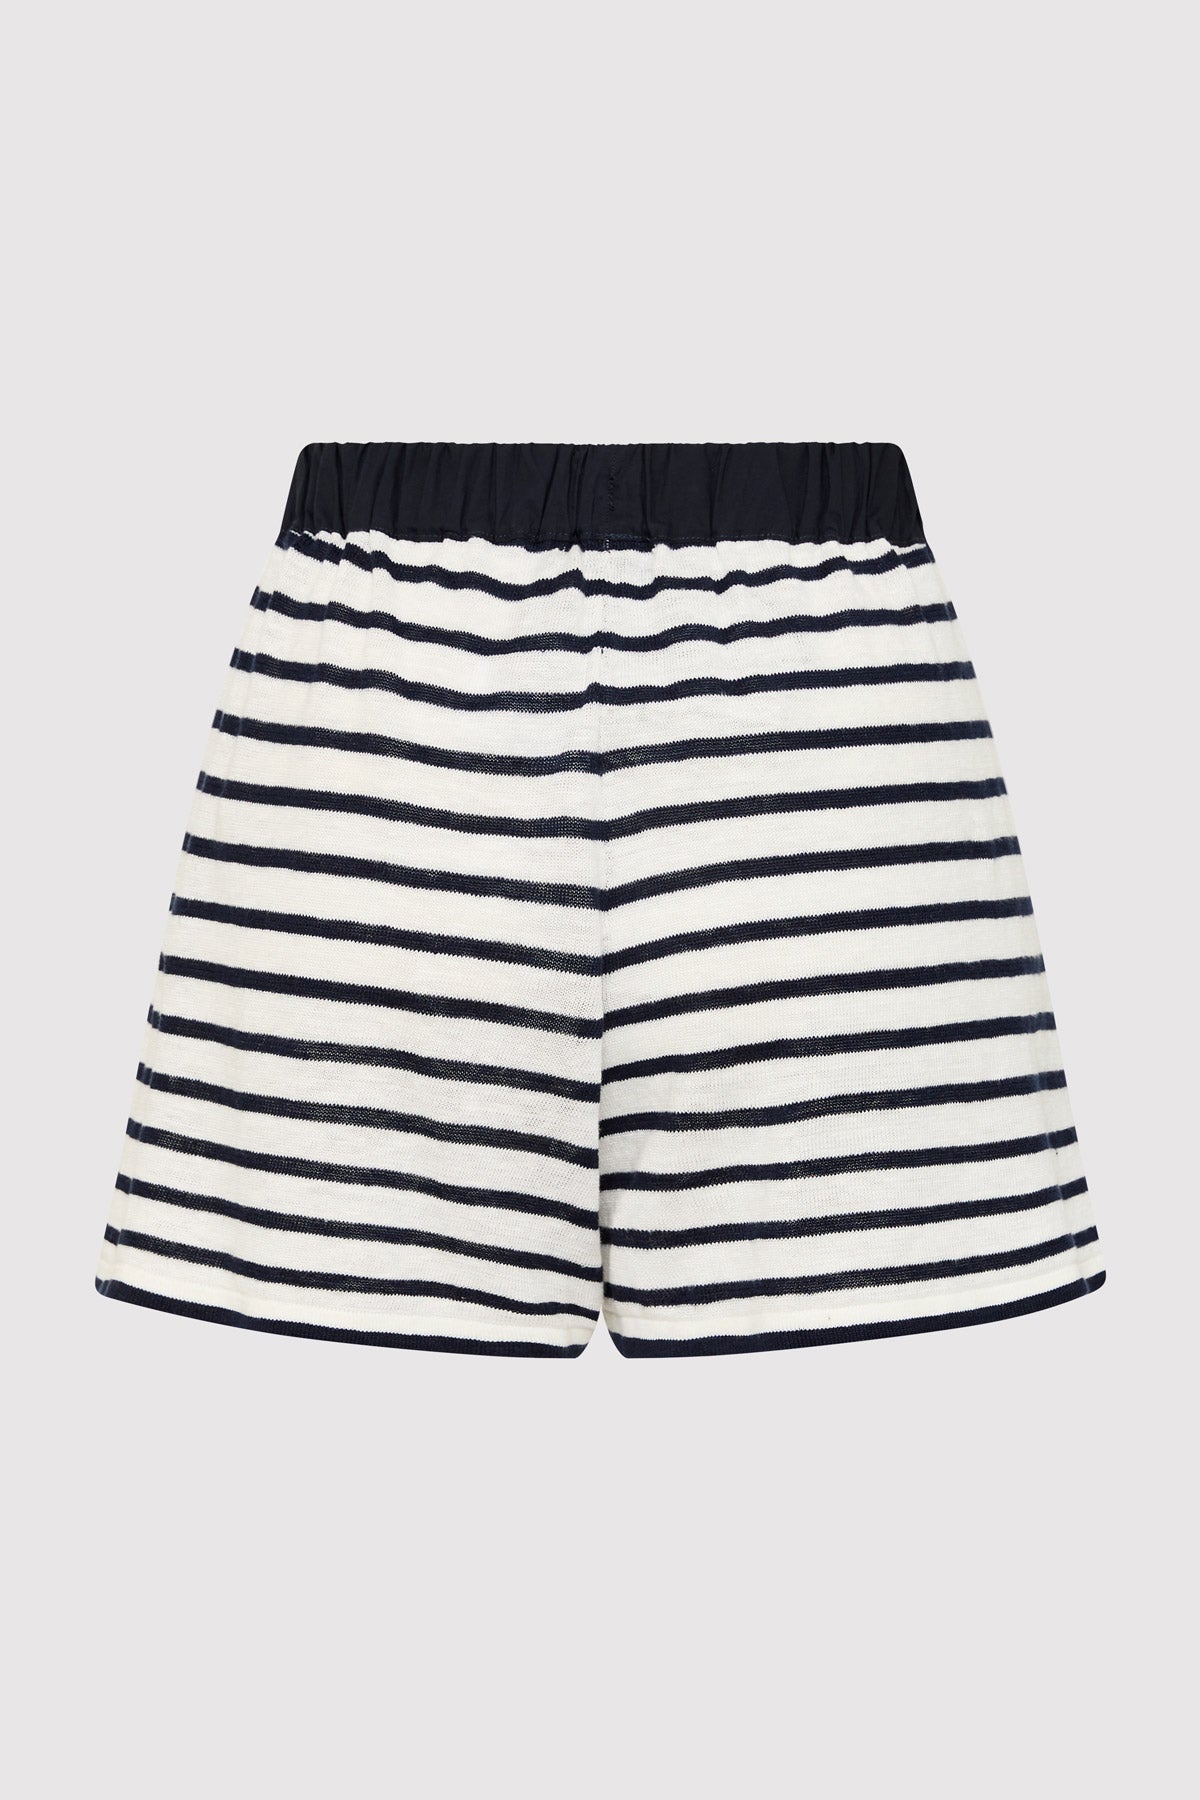 Copain Knit Shorts - Brenton Stripe